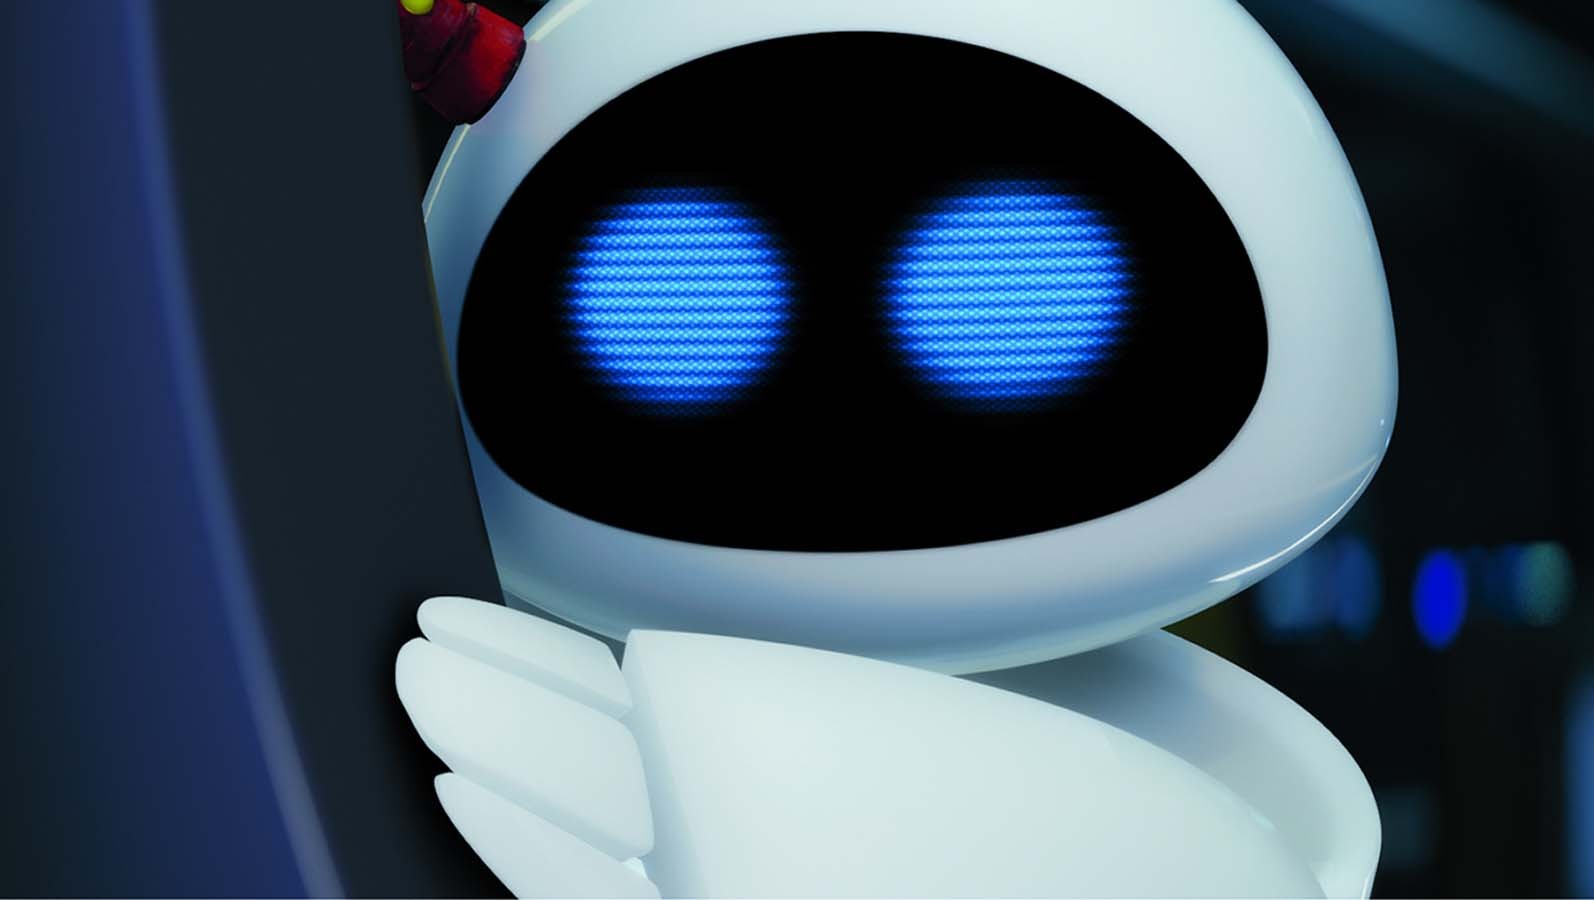 General 1594x900 WALL-E robot movies animated movies Pixar Animation Studios film stills